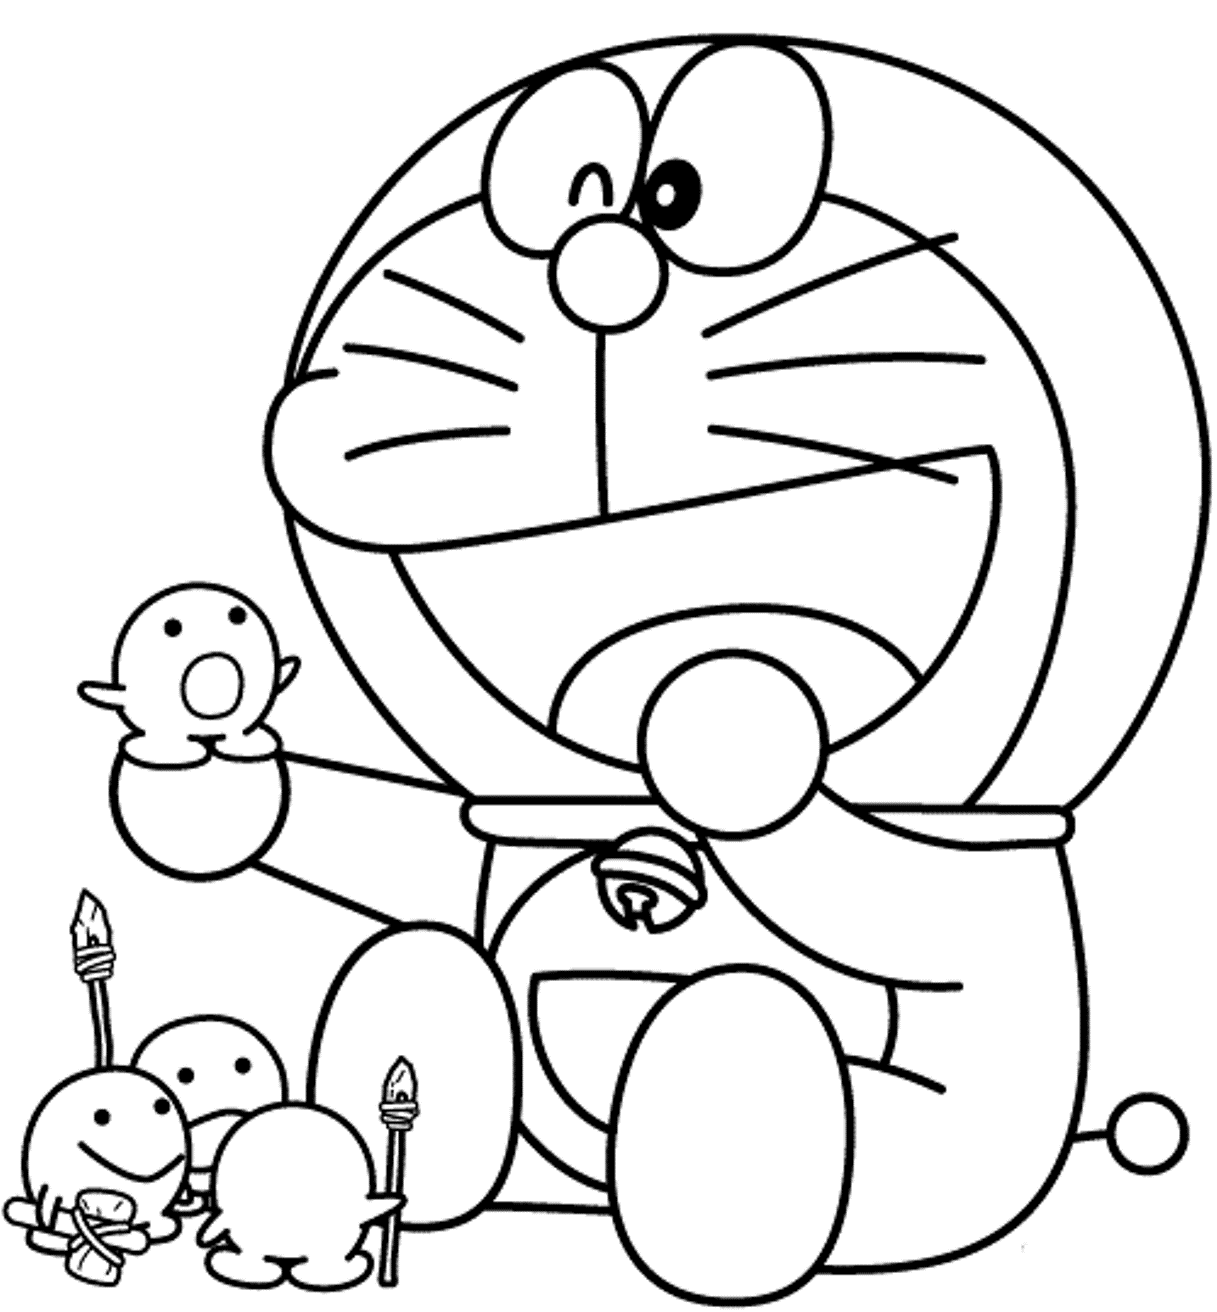 Doraemon Coloring Pages   Coloring Cool